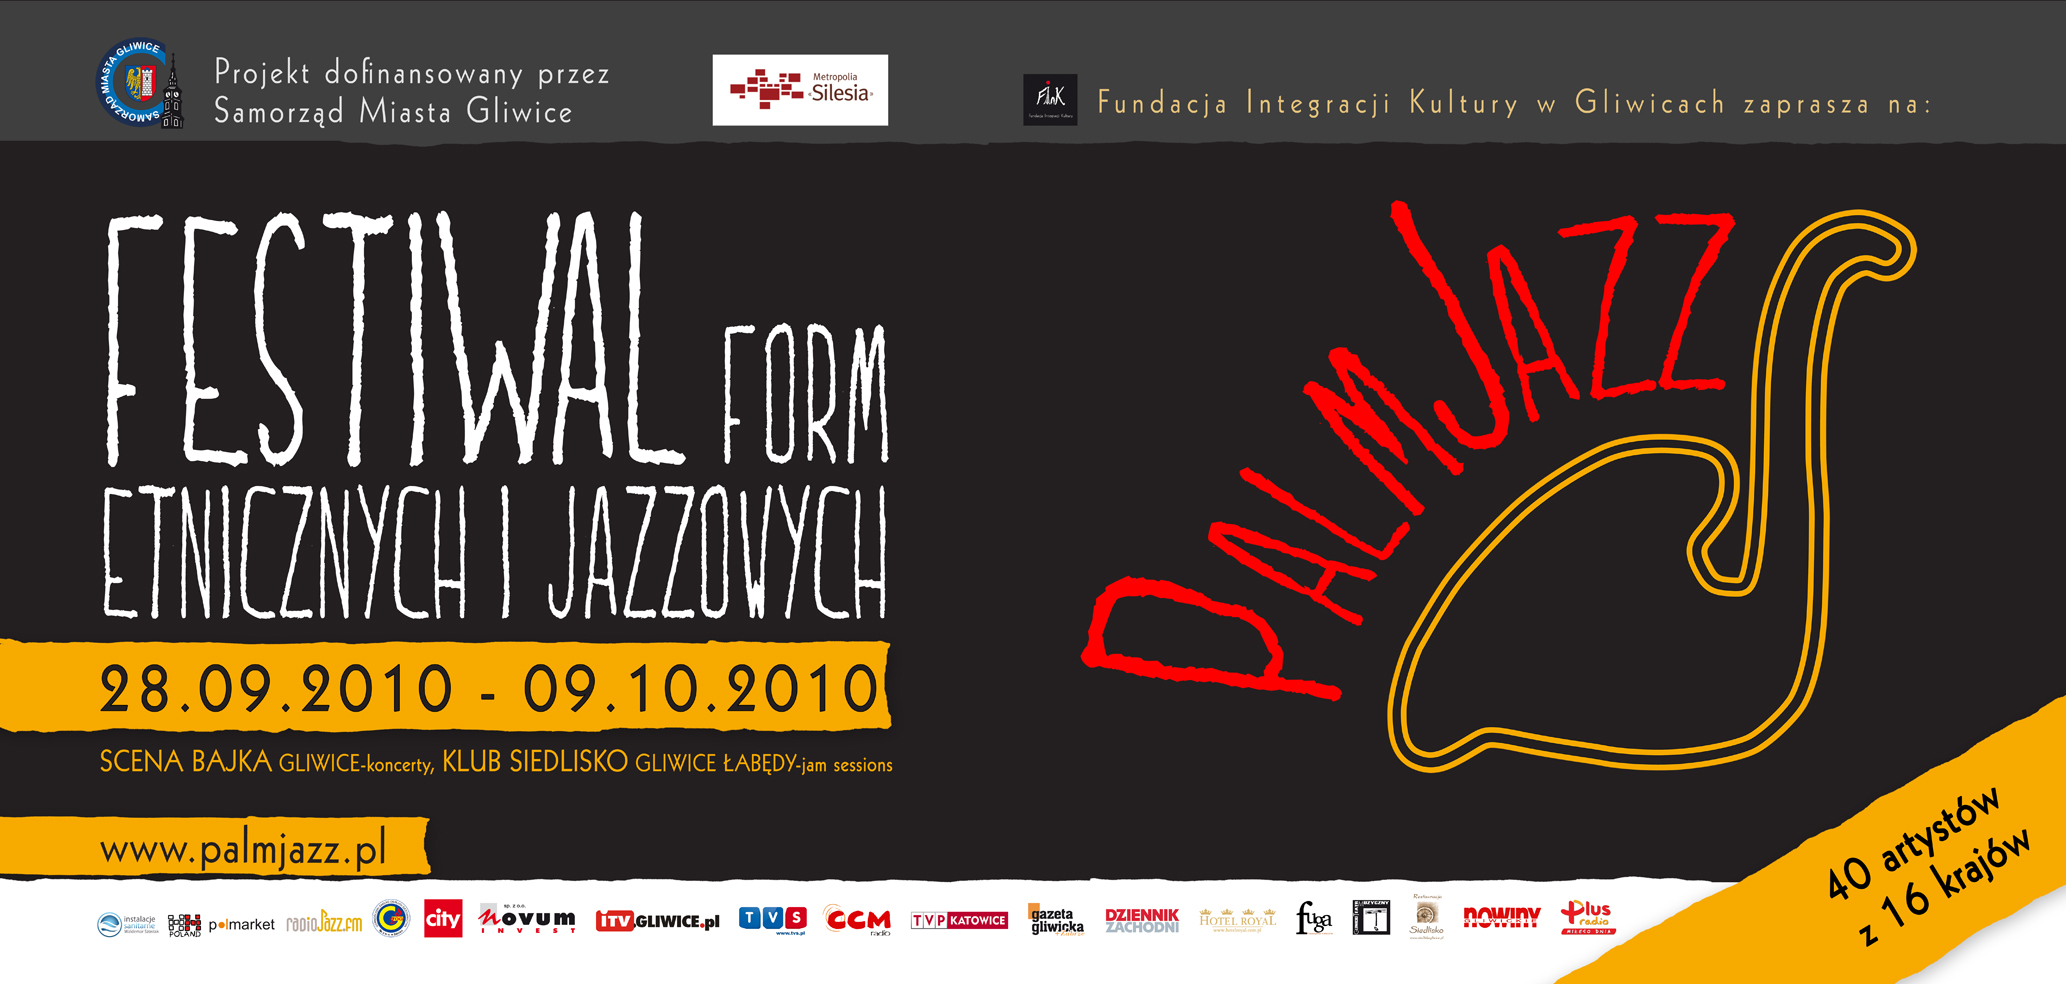 PalmJazz Festival